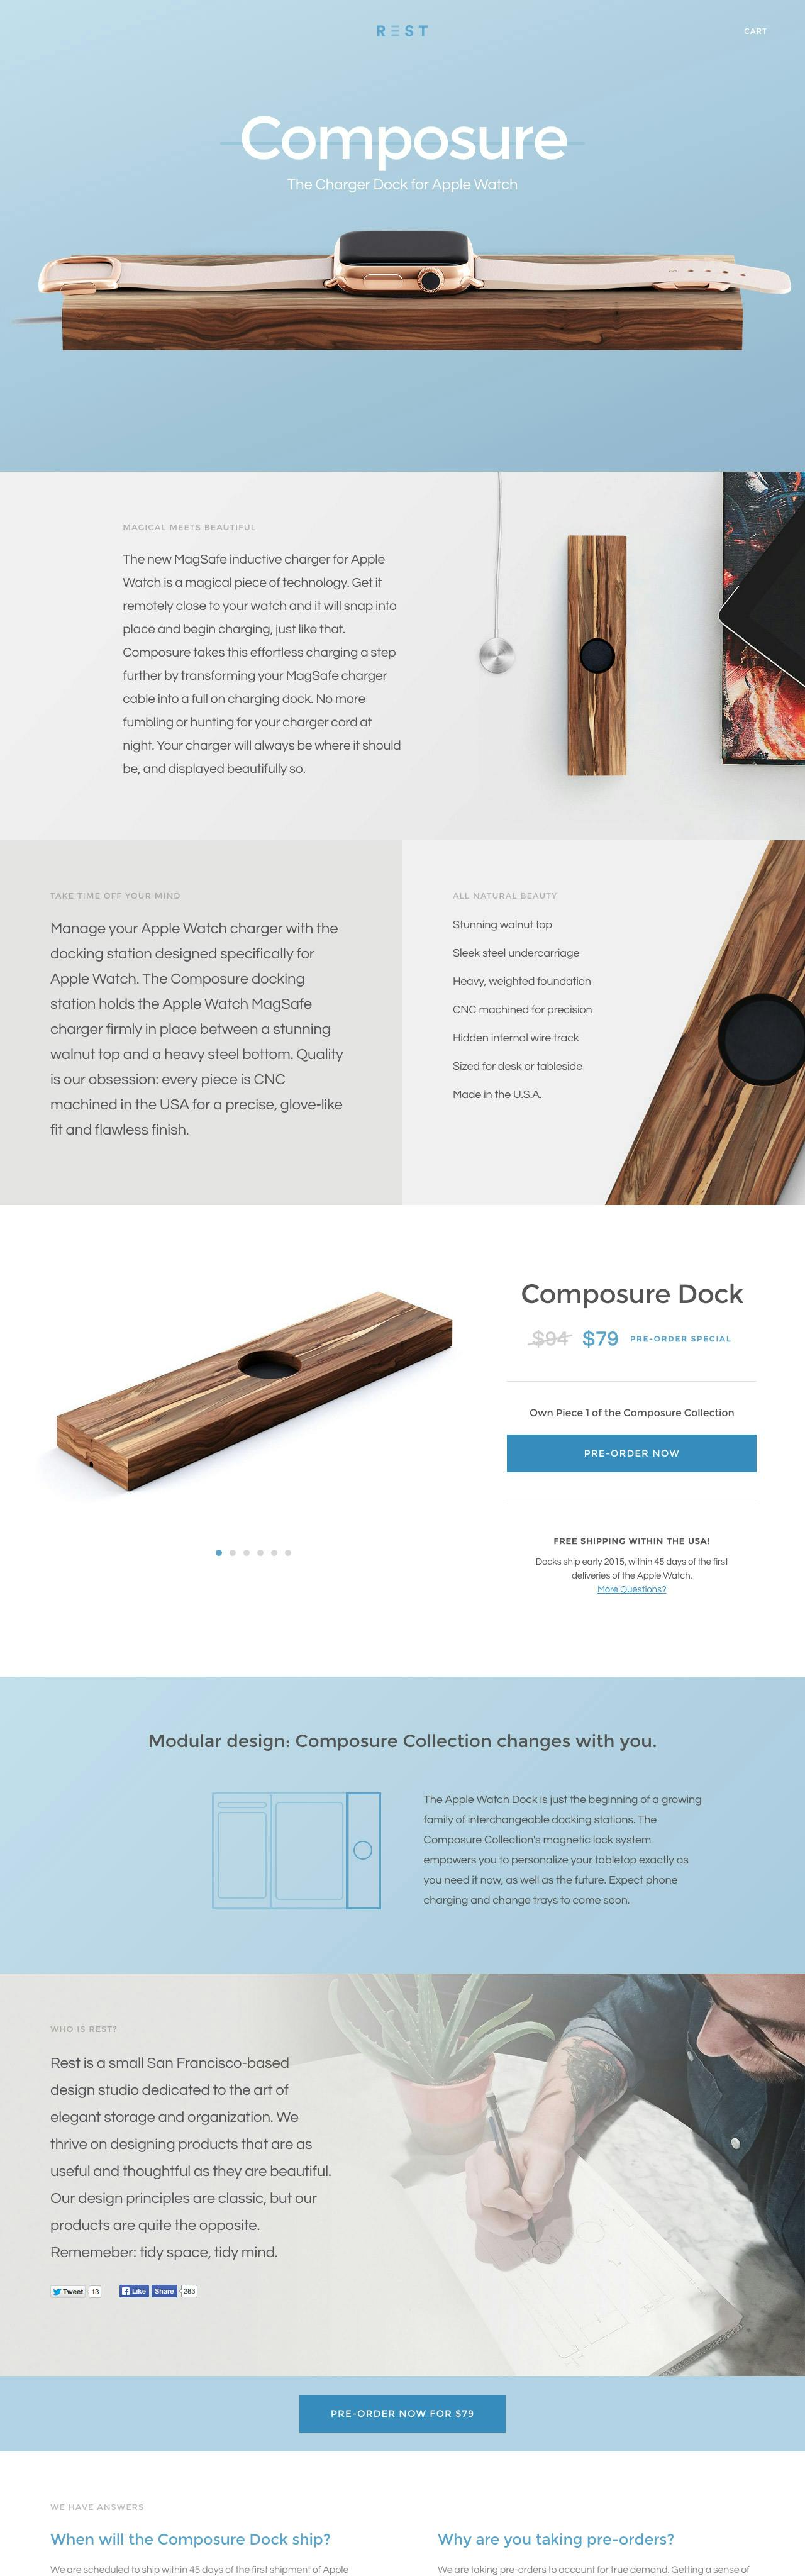 Composure Dock by Rest Website Screenshot